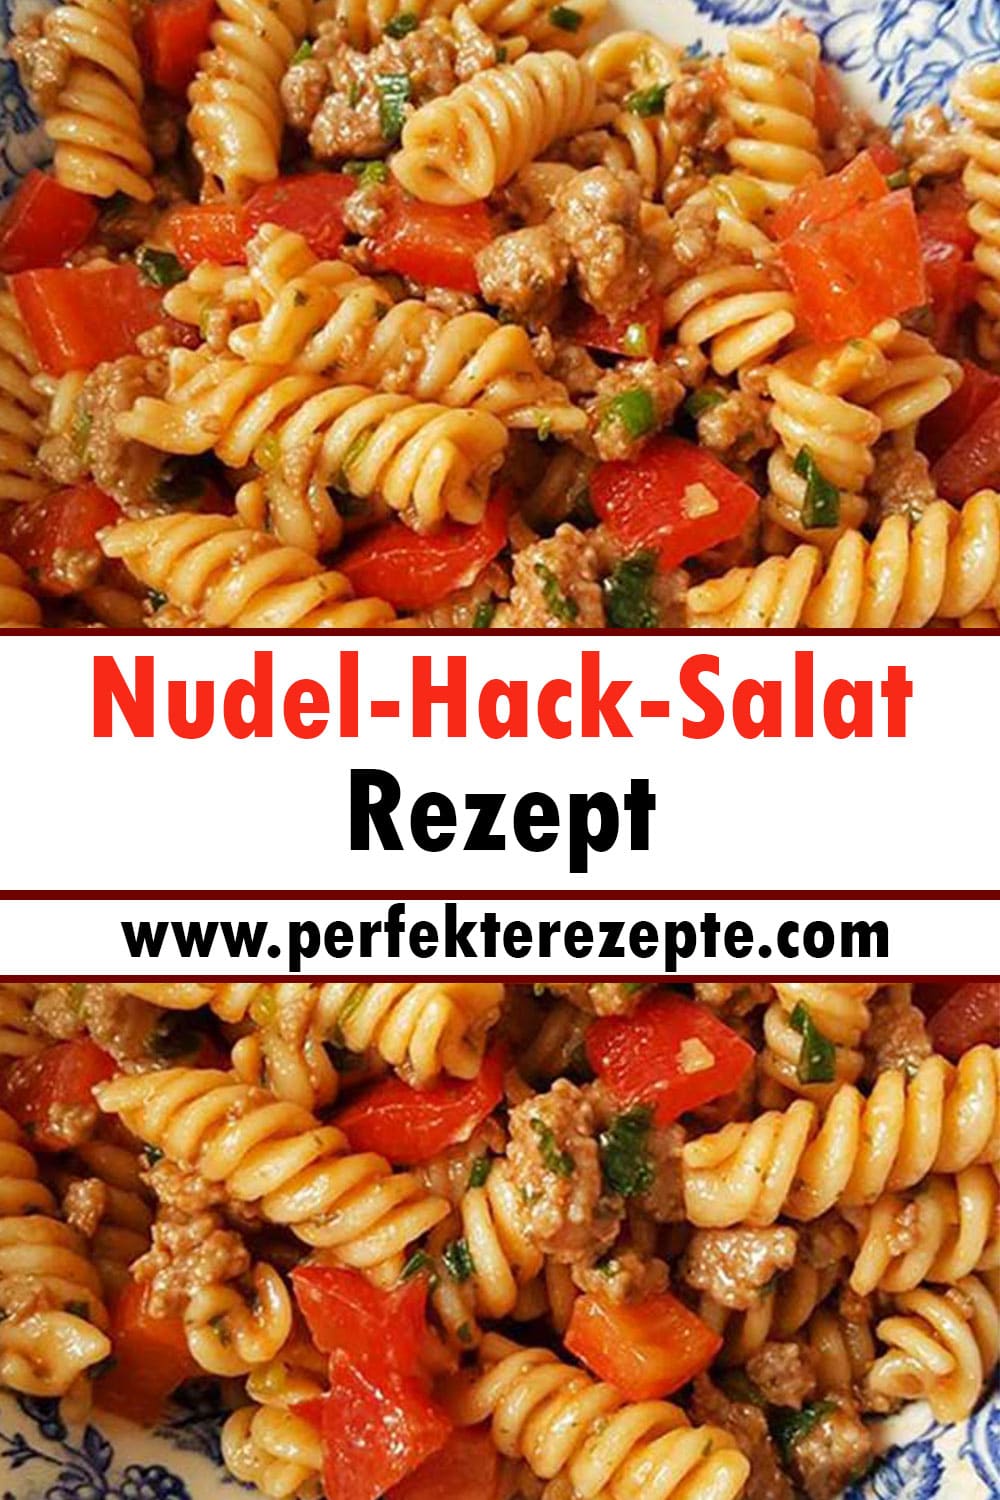 Nudel-Hack-Salat Rezept